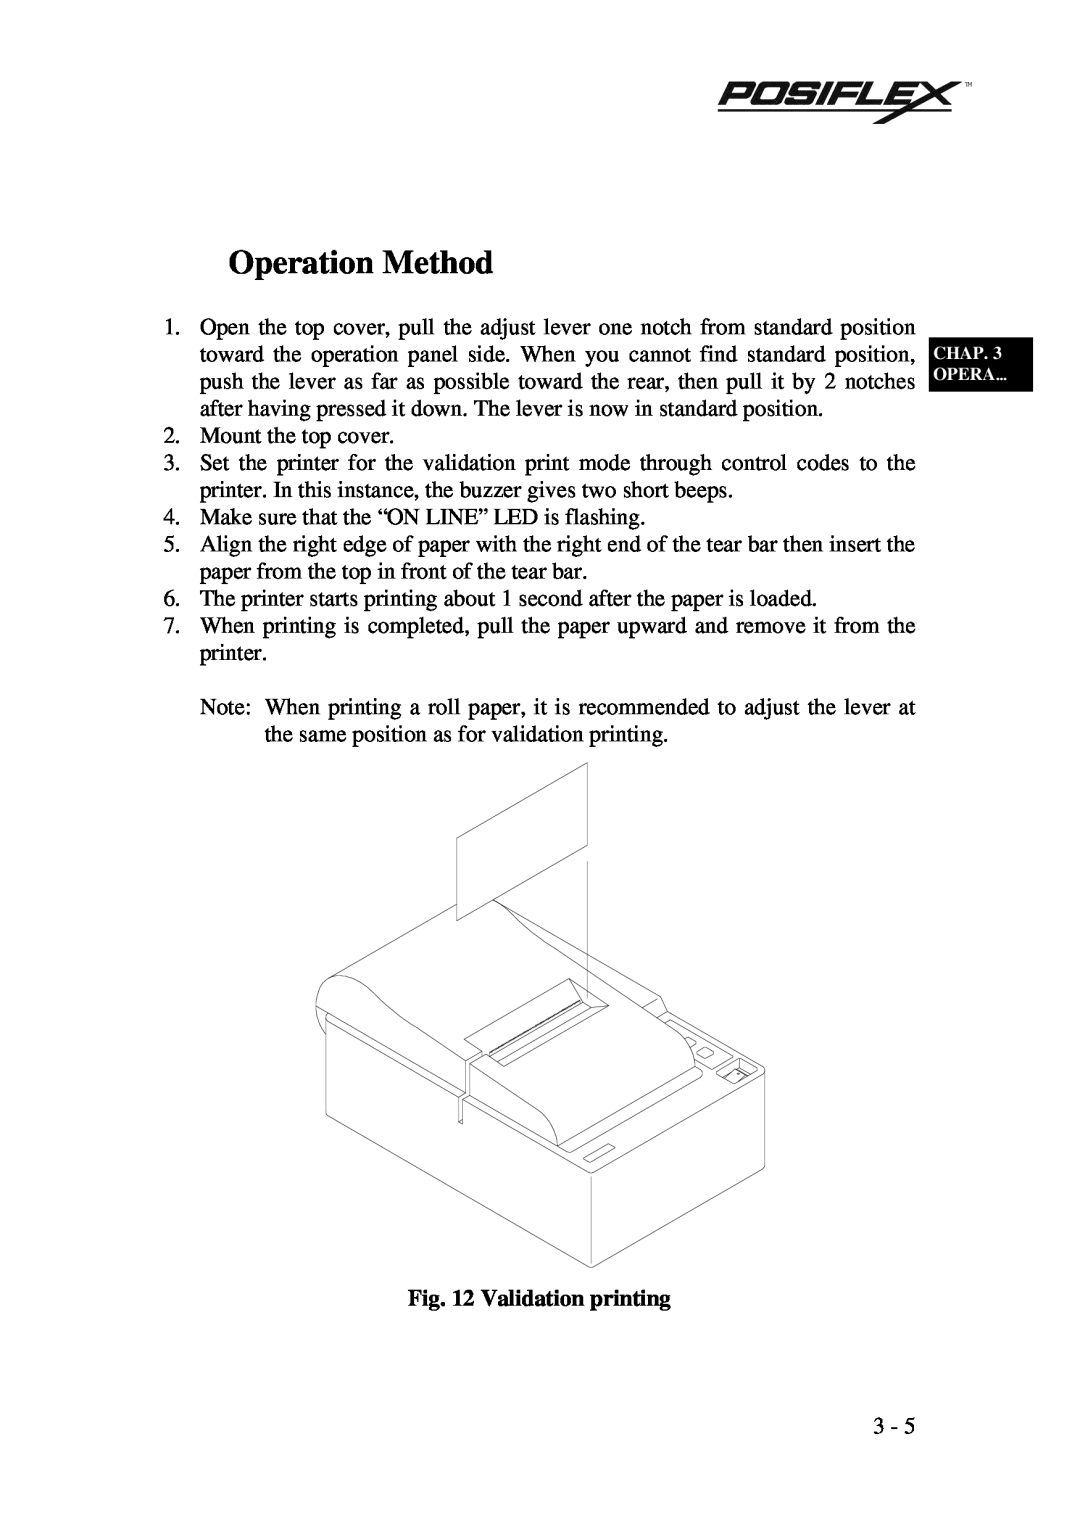 POSIFLEX Business Machines PP3000 manual Operation Method, Validation printing 